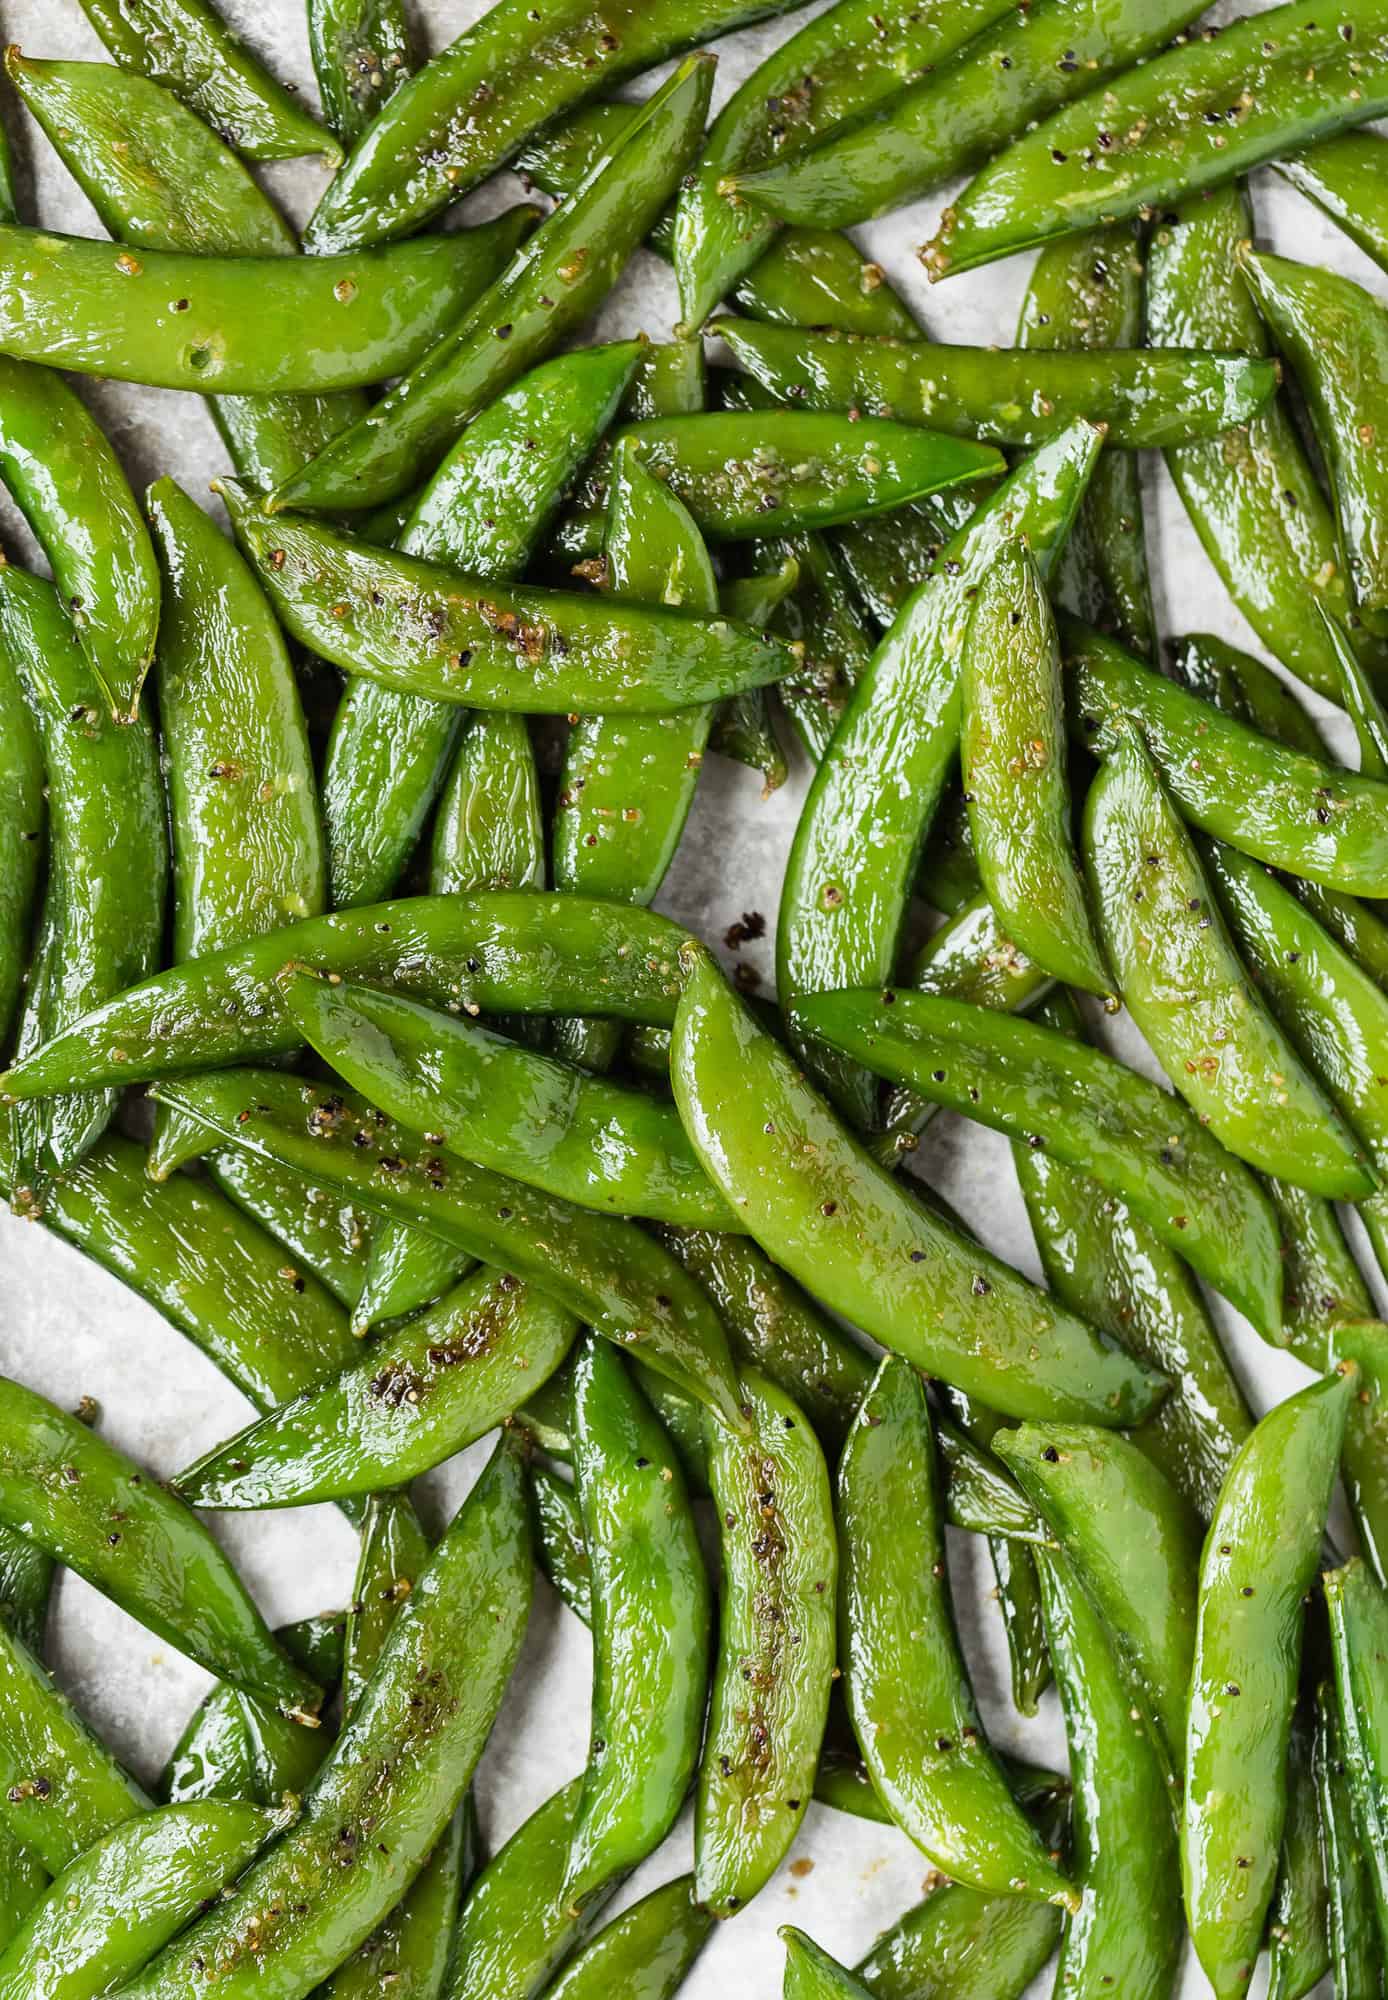 Close up view of sugar snap peas on a pan.